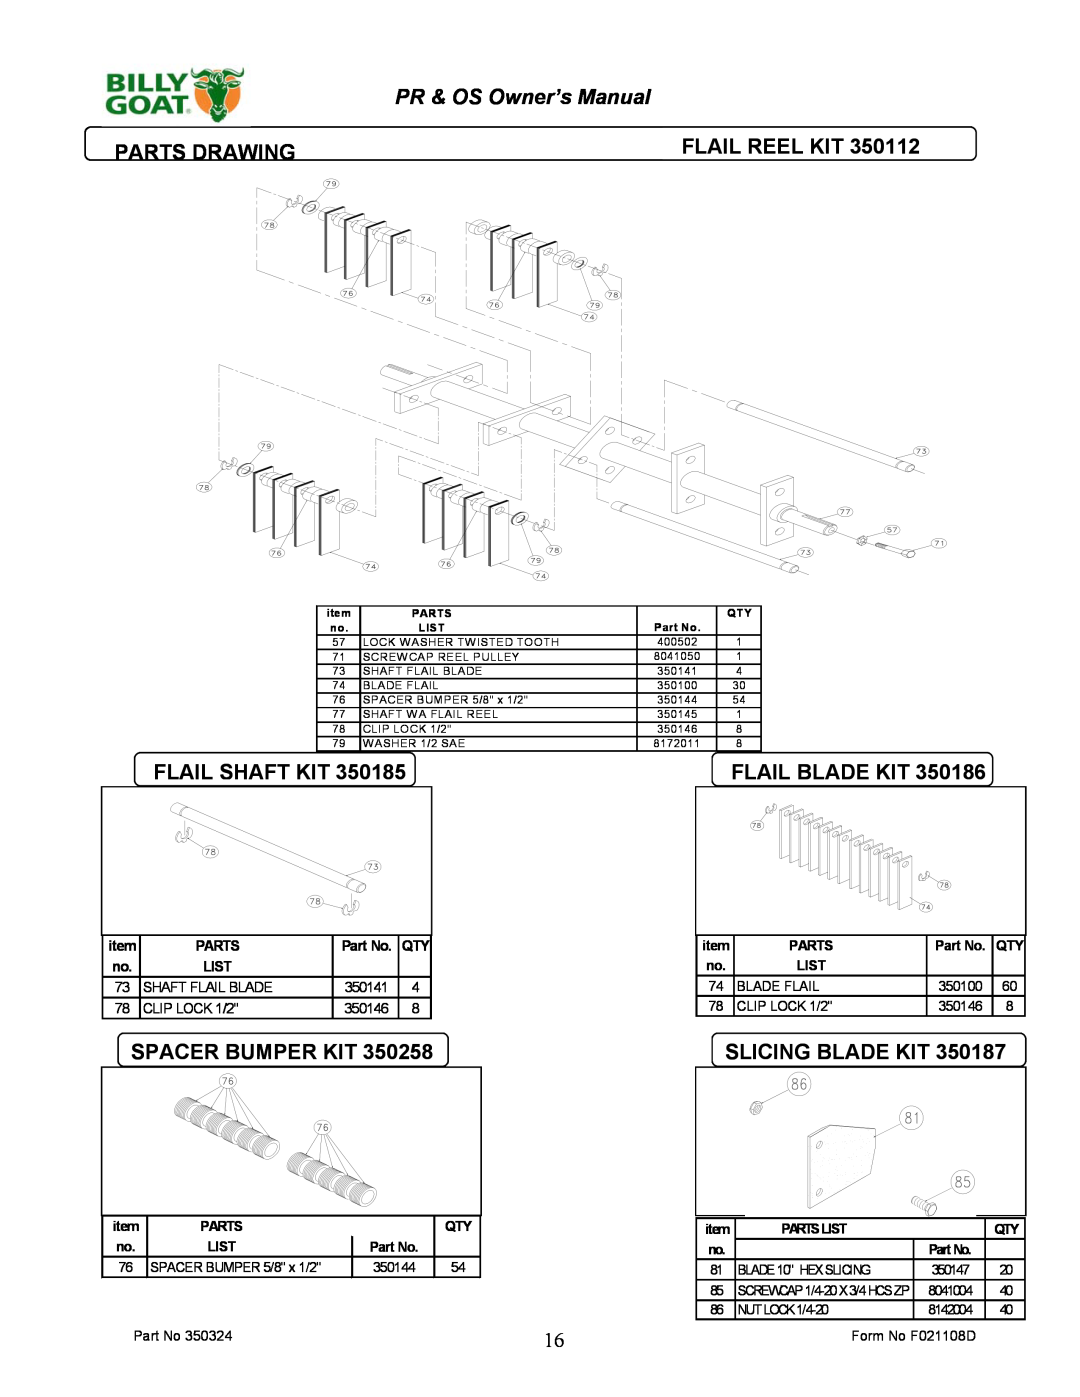 Billy Goat PR550T Parts Drawing, Flail Shaft Kit, Flail Blade Kit, Spacer Bumper Kit, Slicing Blade Kit, Flail Reel Kit 